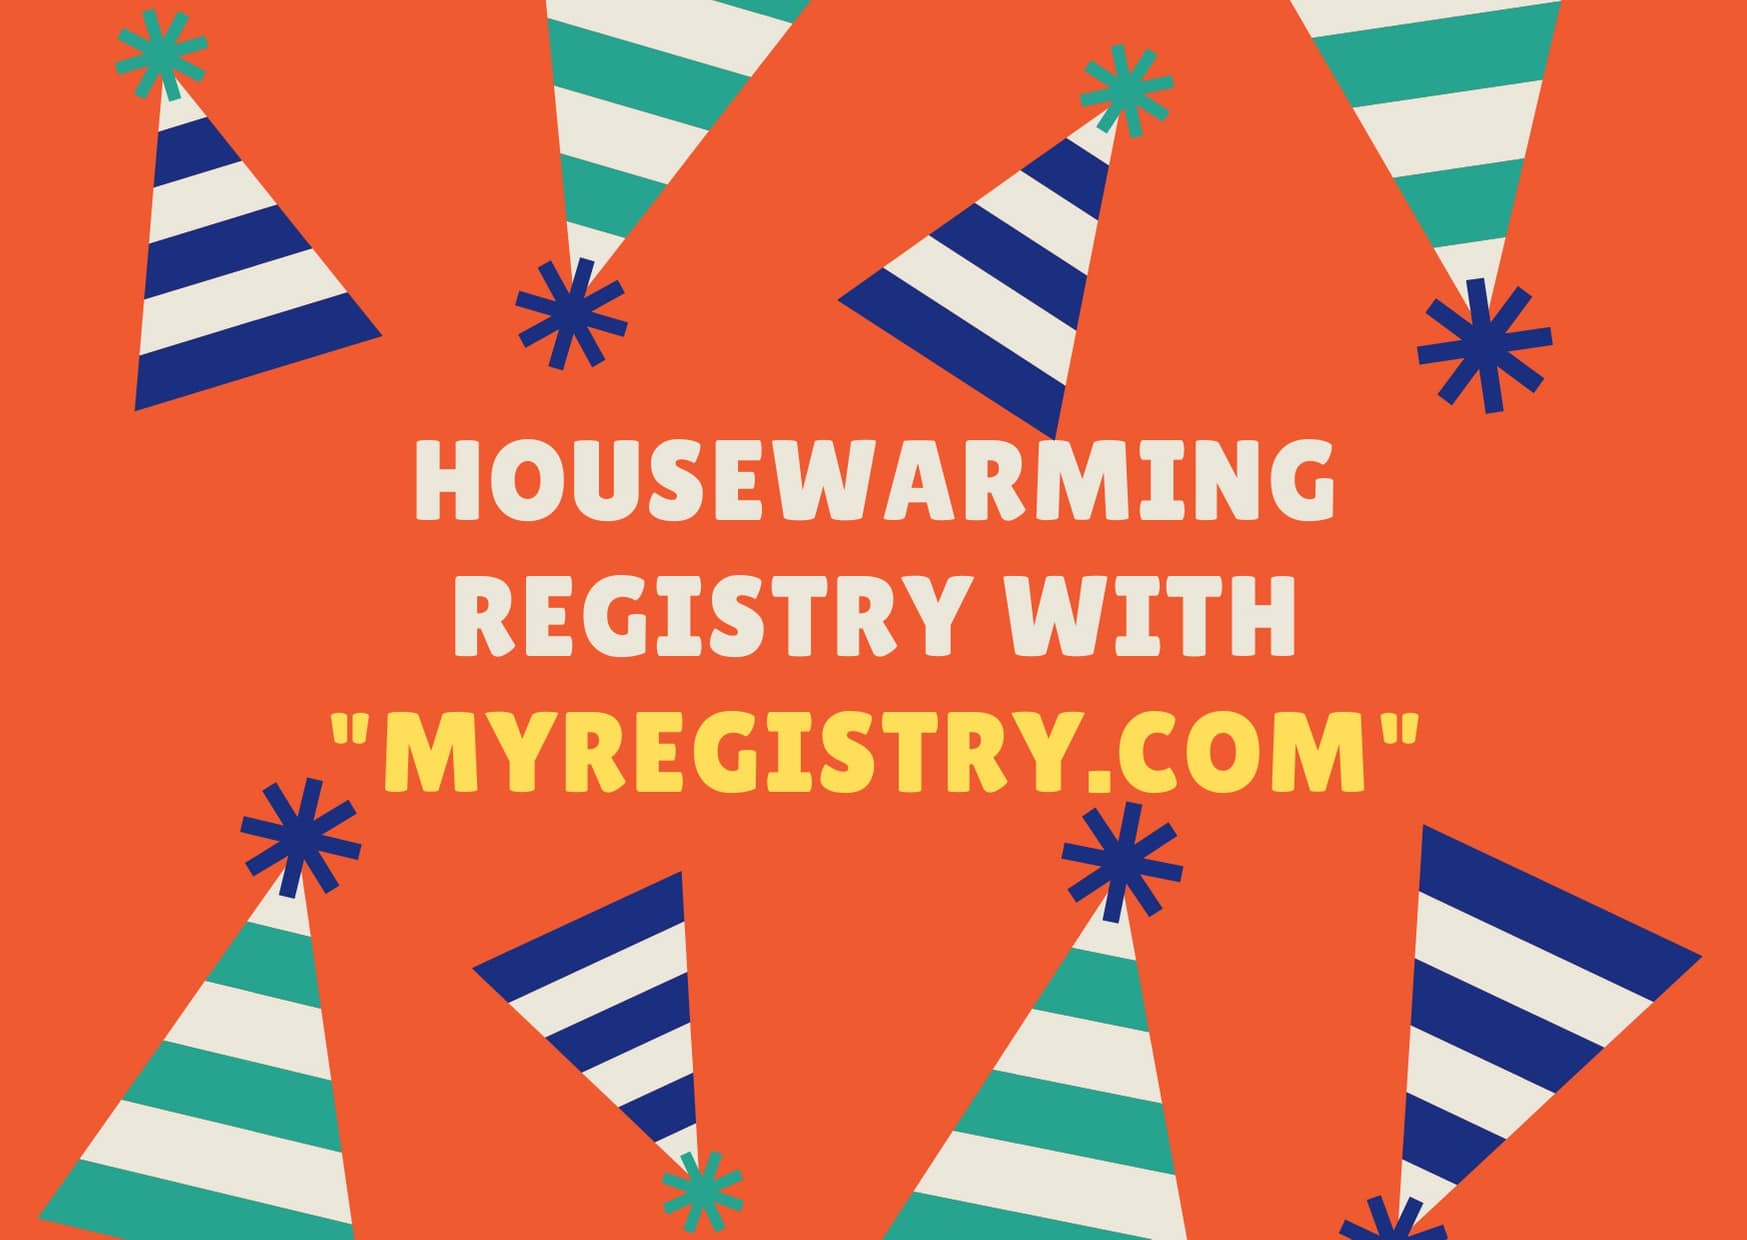 https://gohousewarming.com/wp-content/uploads/2020/08/Housewarming-registry-with-myregistry.jpg